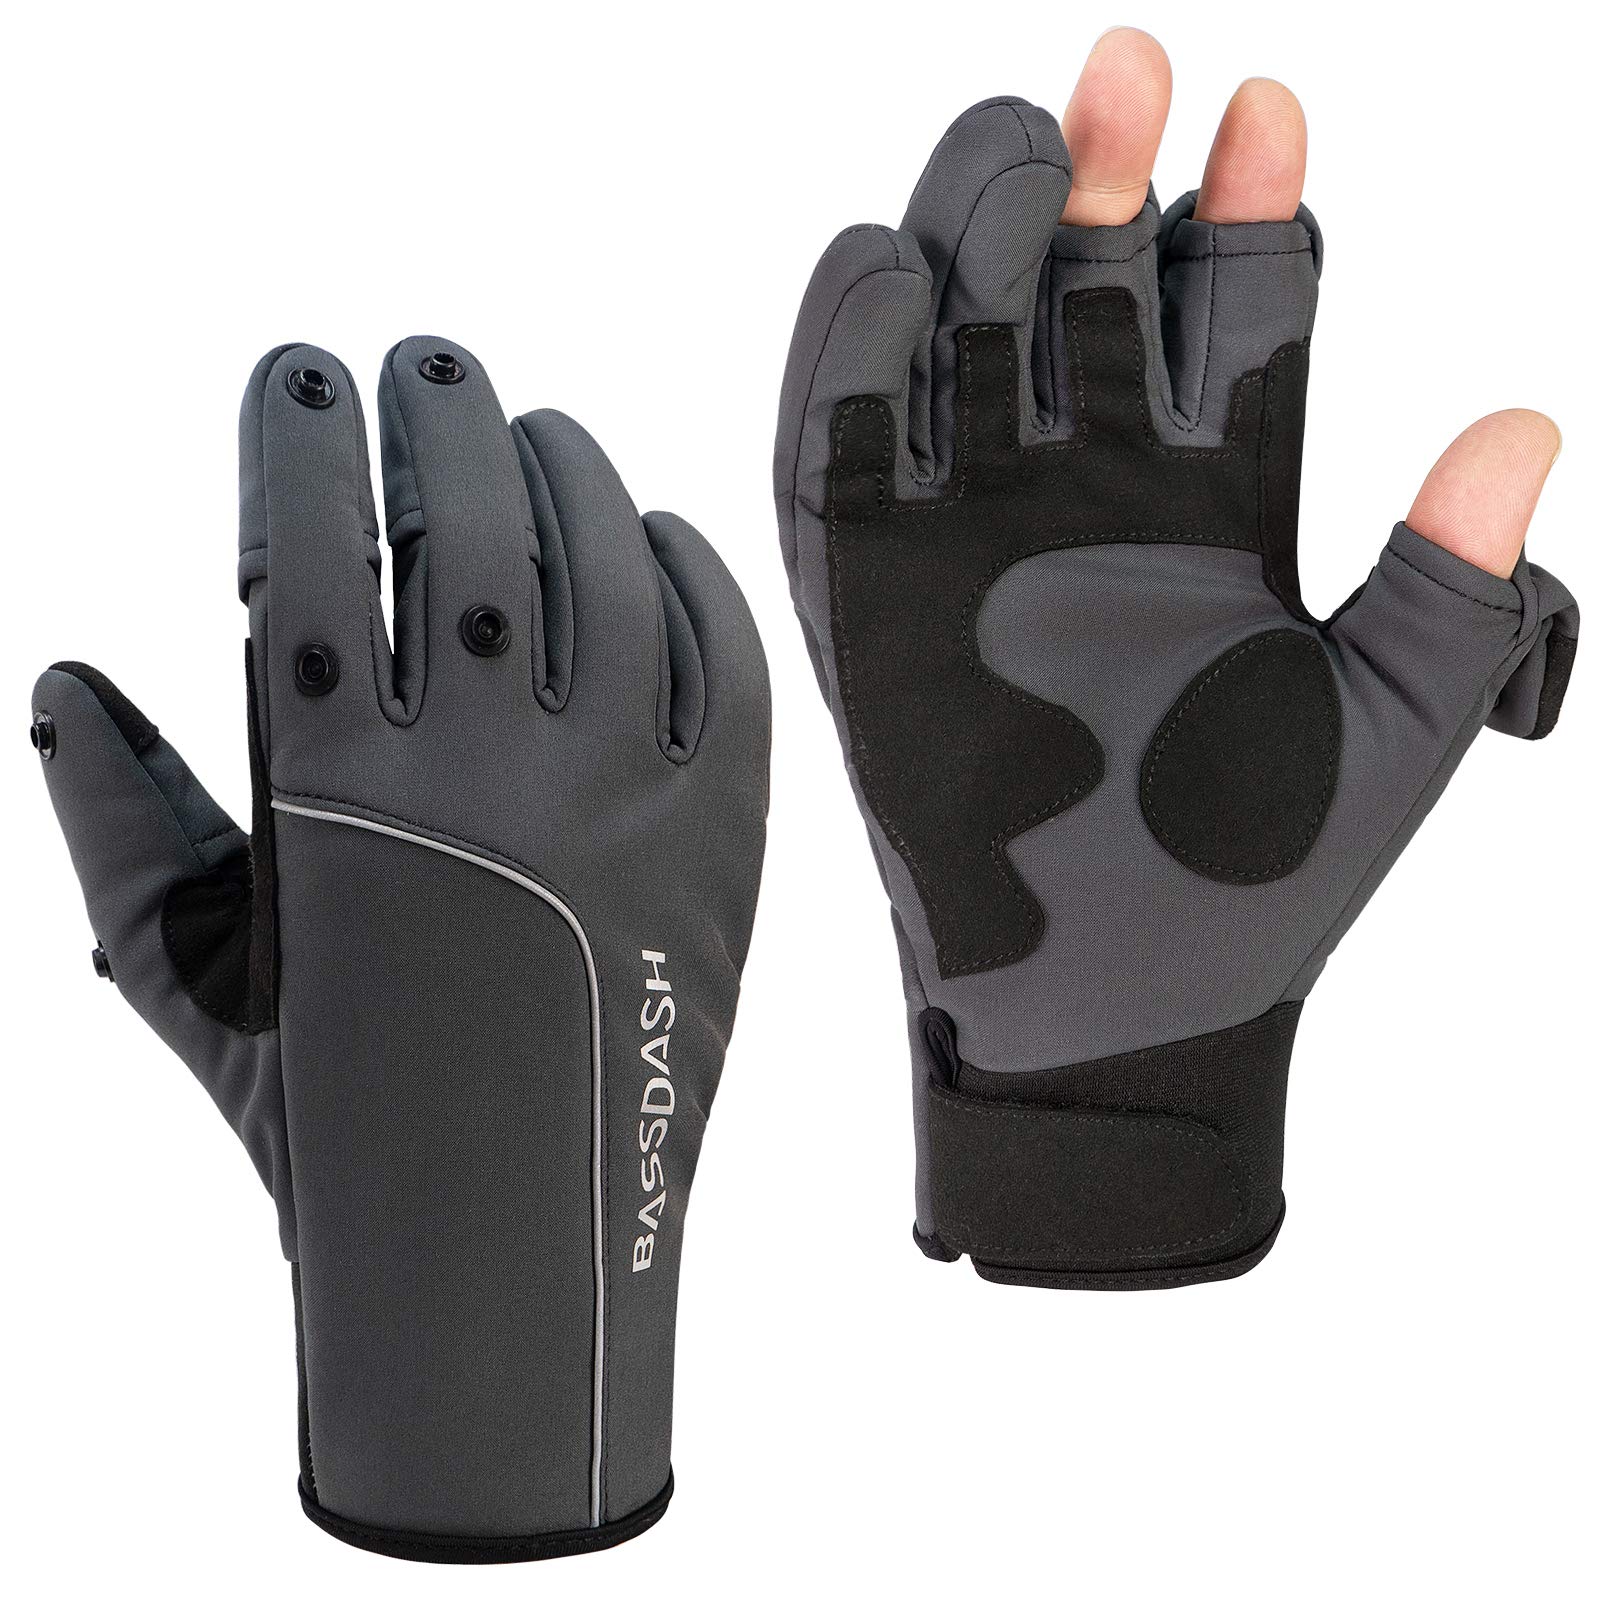 Waterproof Fishing Gloves for Men - Ice Fishing Turkey